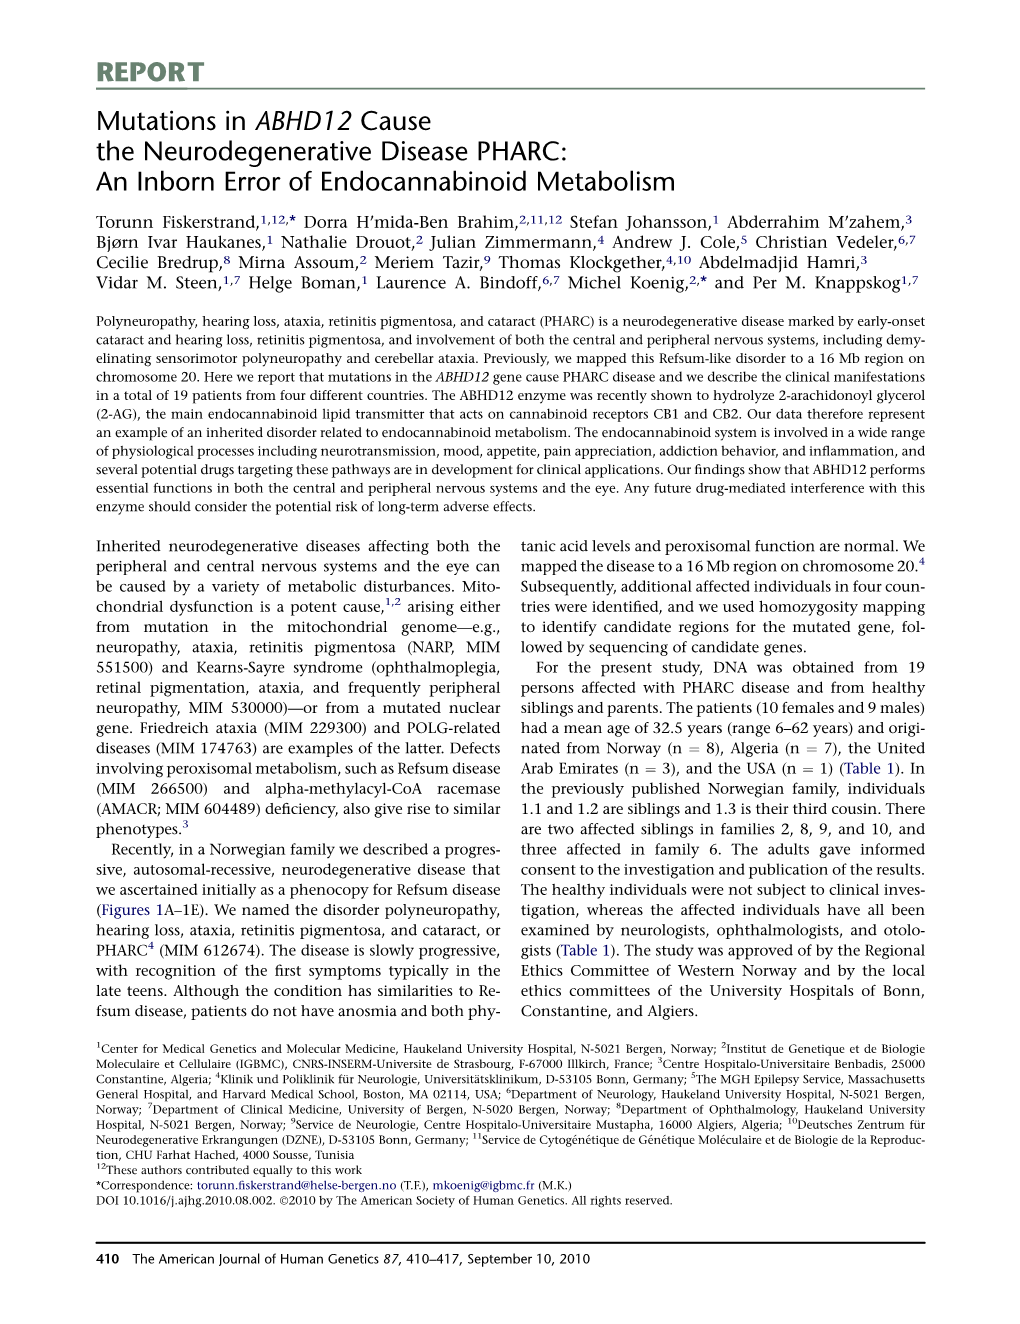 Mutations in ABHD12 Cause the Neurodegenerative Disease PHARC: an Inborn Error of Endocannabinoid Metabolism